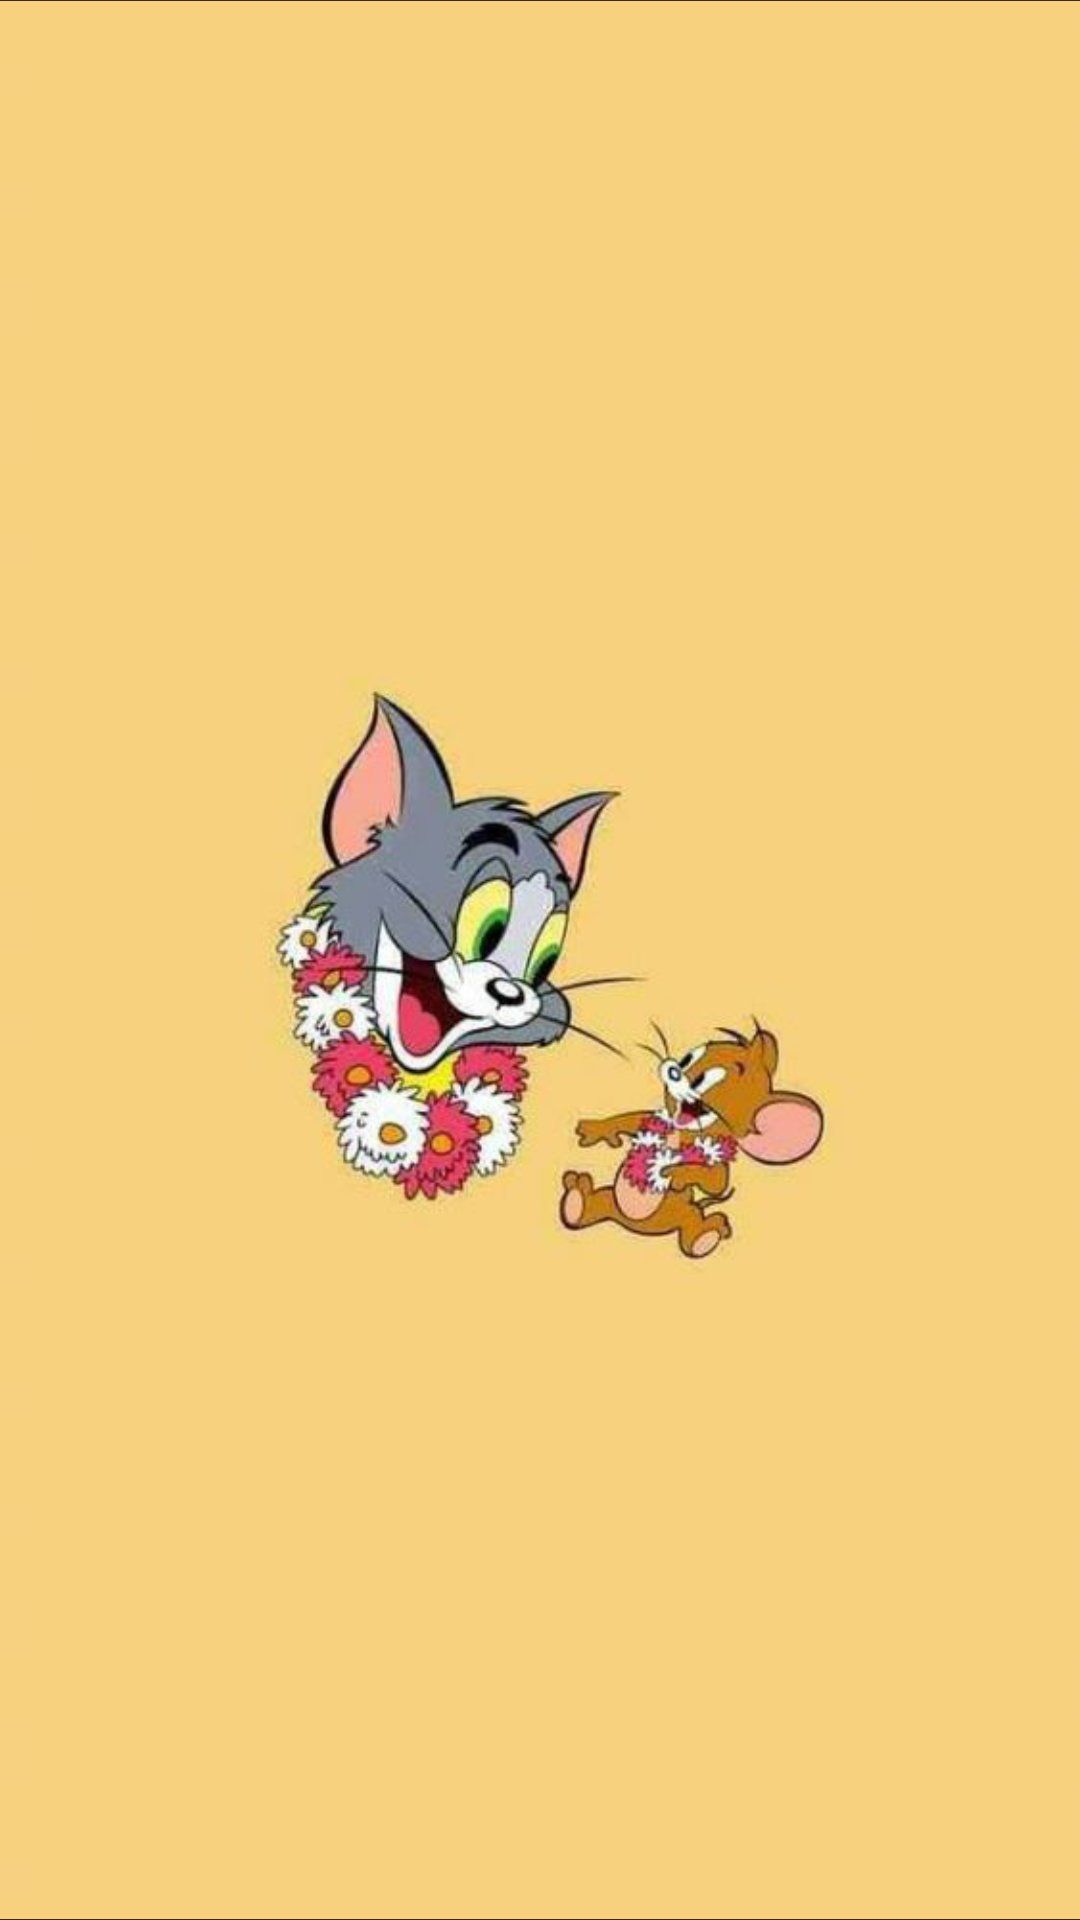 Cute cartoon wallpaper, yellow background, tom and jerry wallpaper, cat and mouse - Tom and Jerry